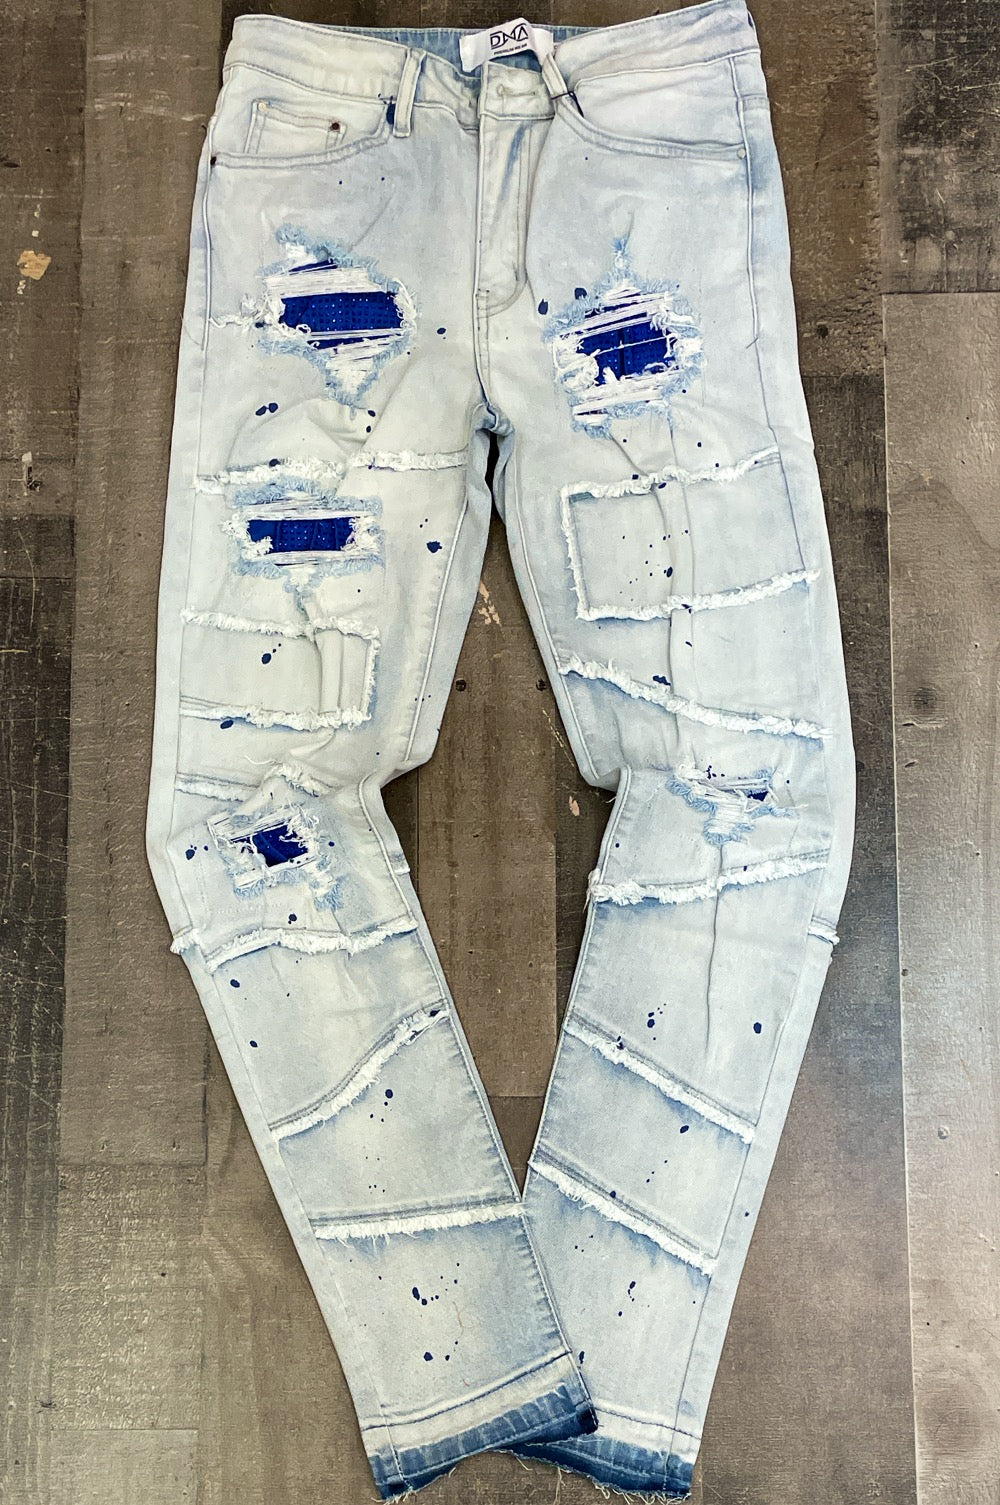 Dna Premium Wear- splattered paint studded jeans